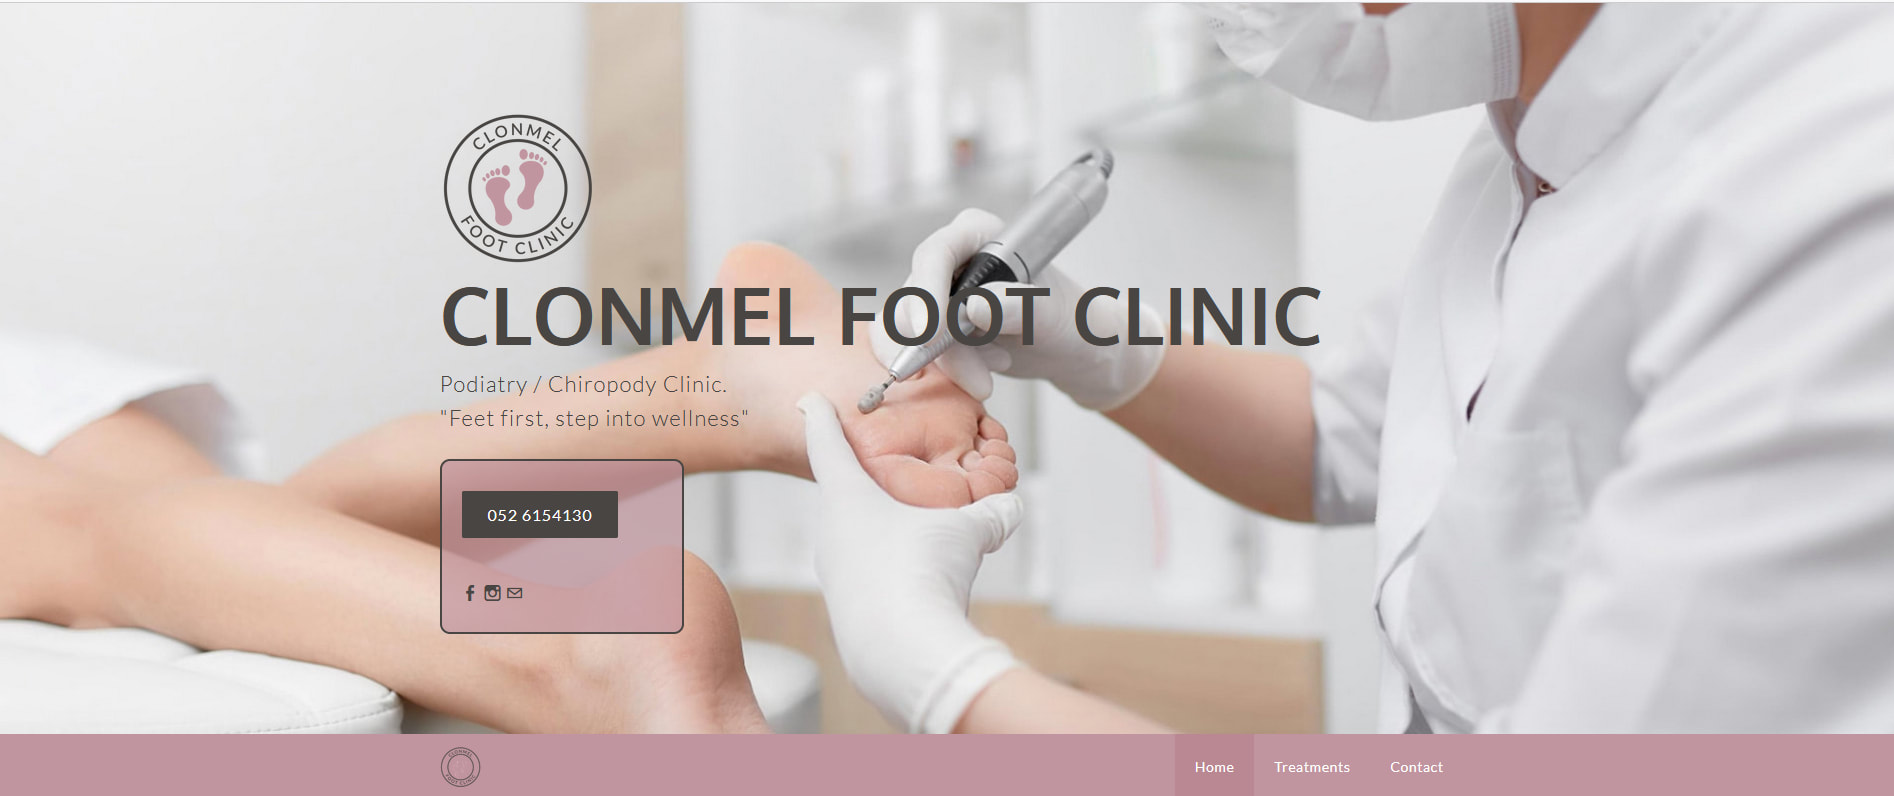 clonmel website design company